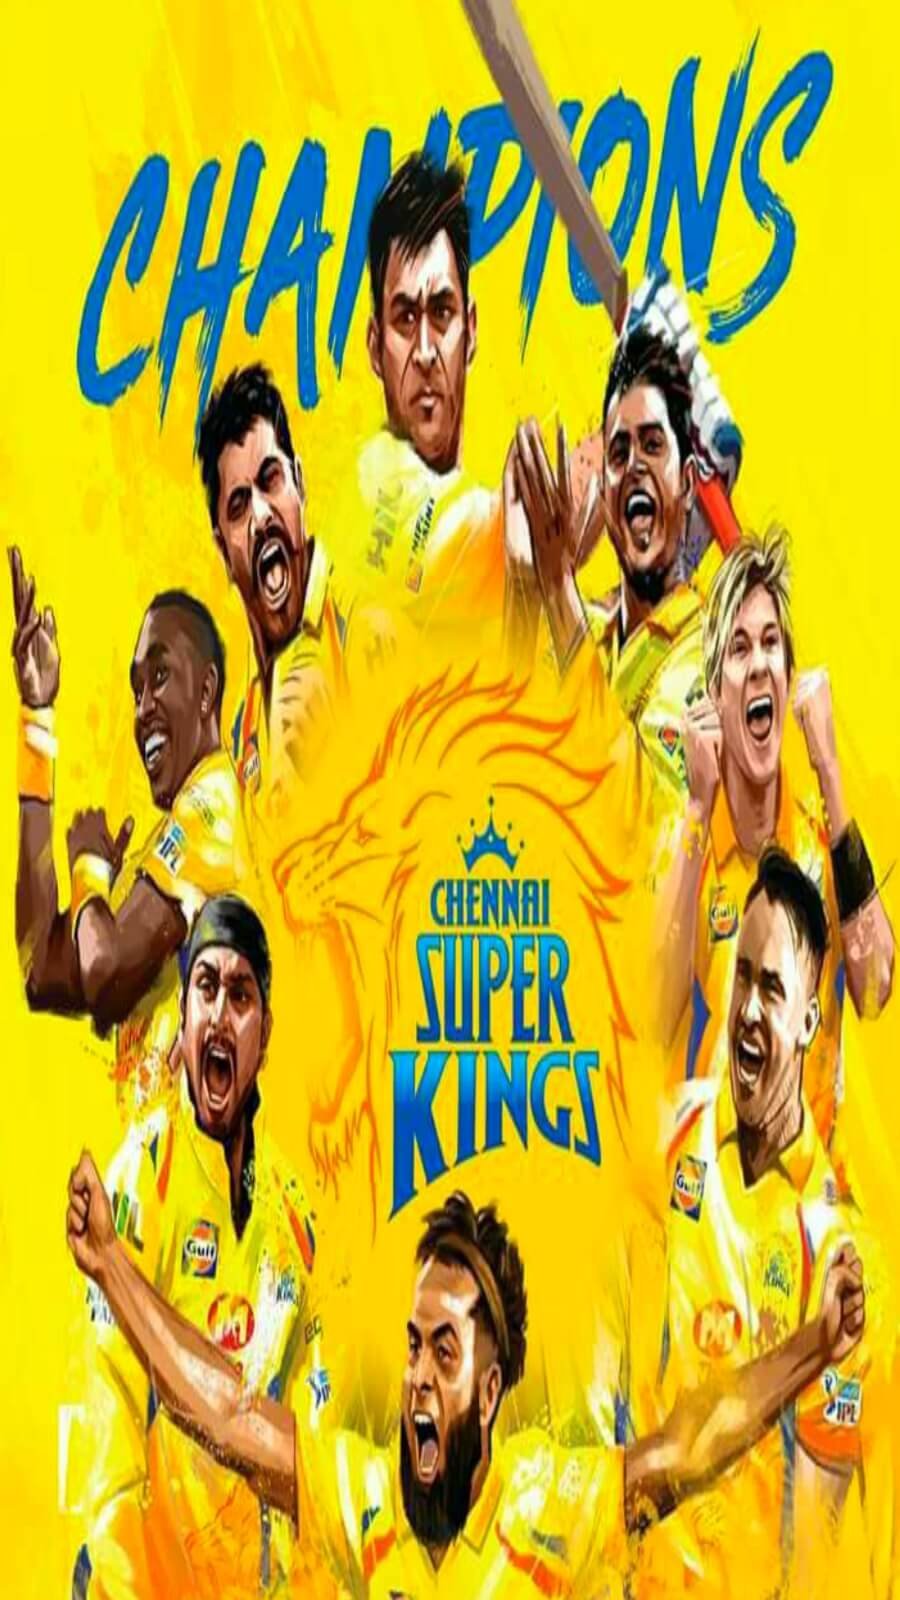 Chennai super kings Wallpaper HD 1080p Wallpaper for PC Free download 2021   Dhoni wallpapers Chennai super kings 1080p wallpaper